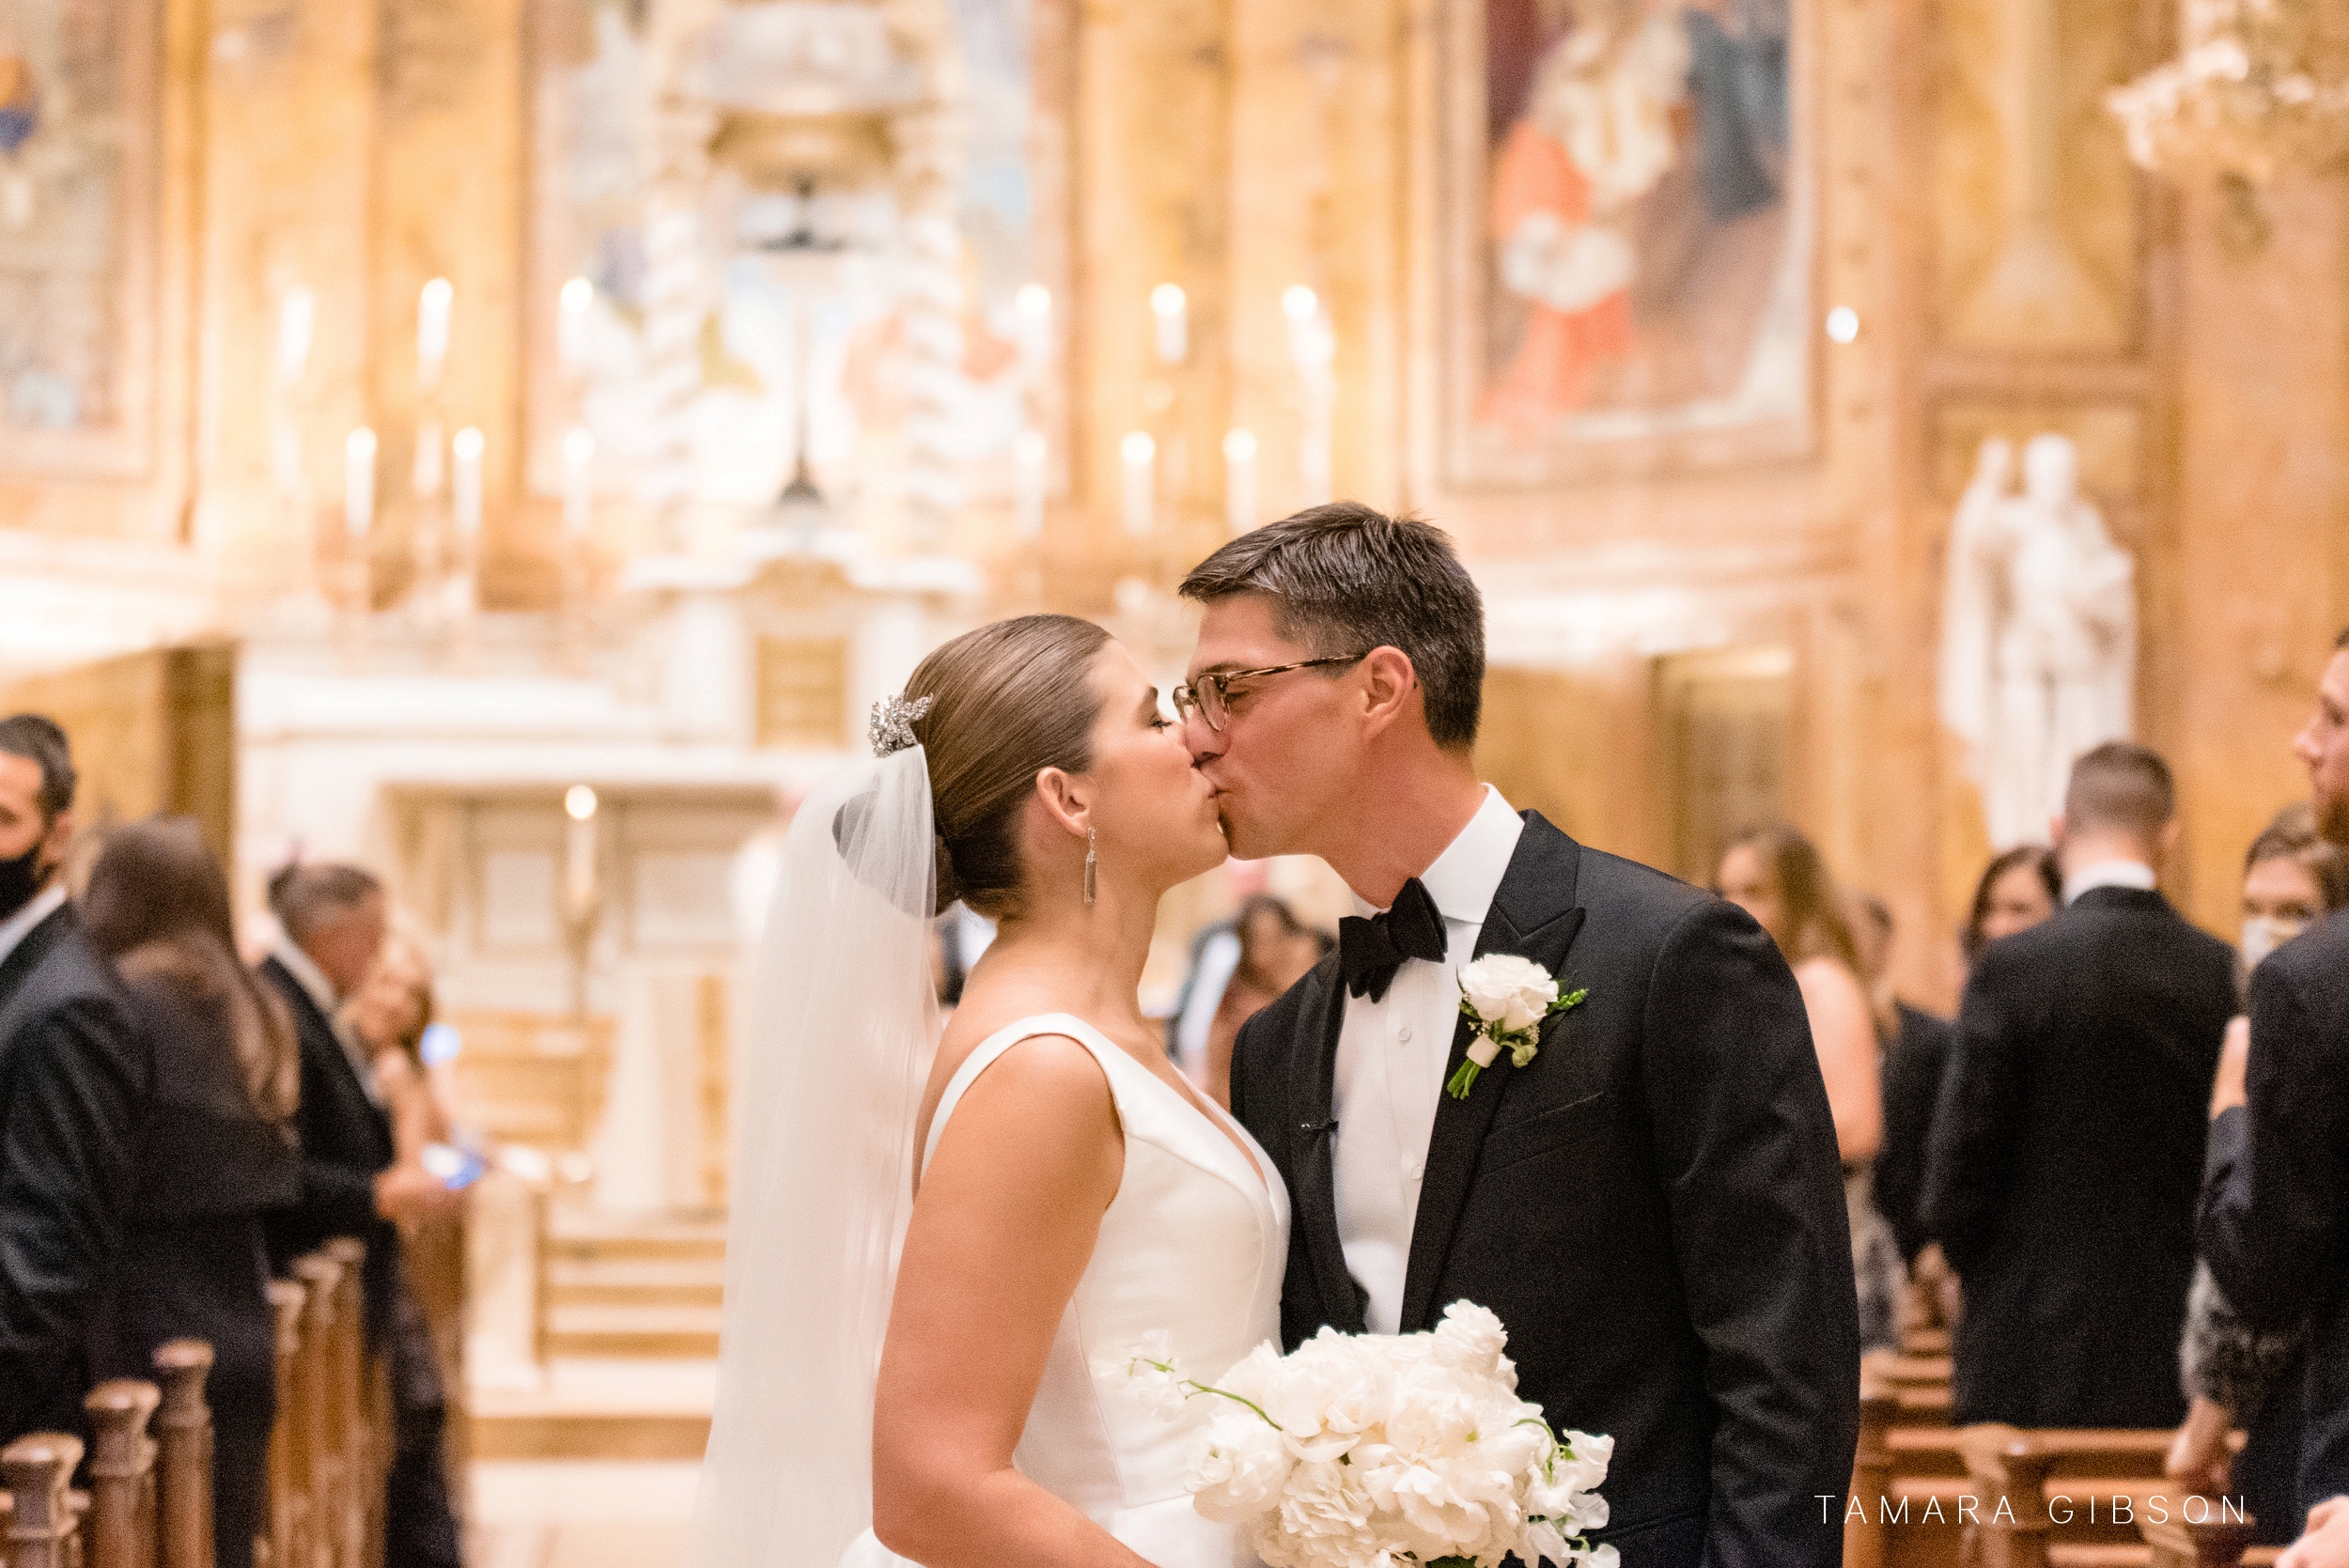 Victoria and Thomas kissing inside St. Ignatius of Loyola Church